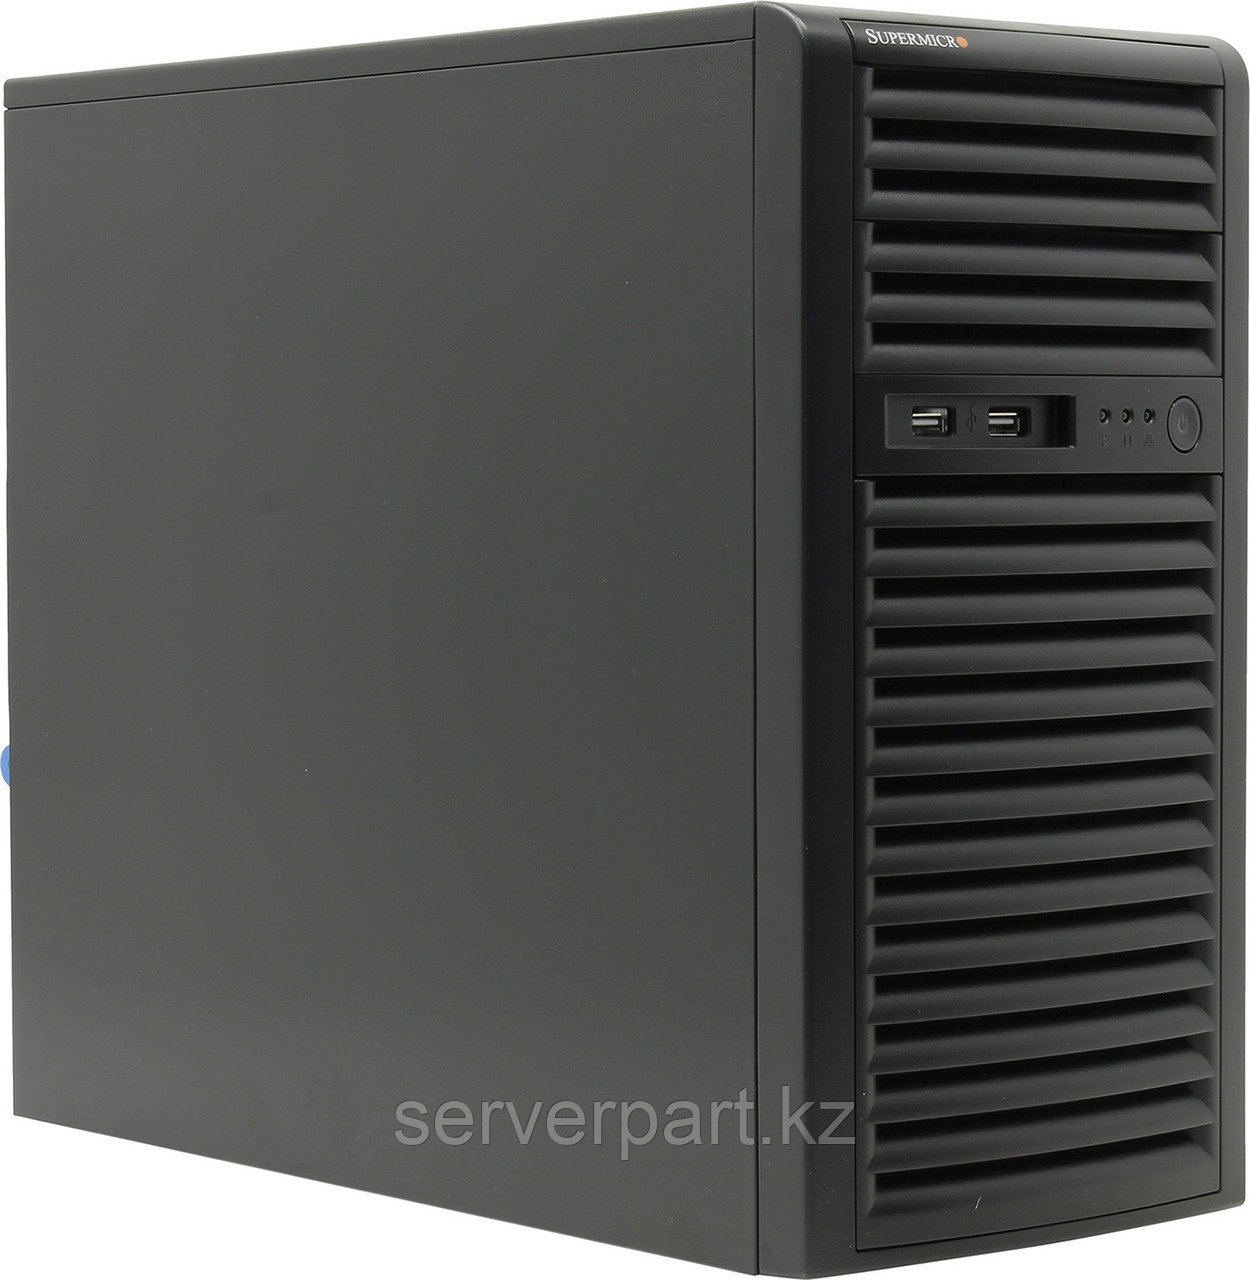 Сервер Supermicro SYS-5039C Tower 4LFF/4-core intel xeon E2124 3.3GHz/48GB EUDIMM/no HDD up-to 4, фото 1